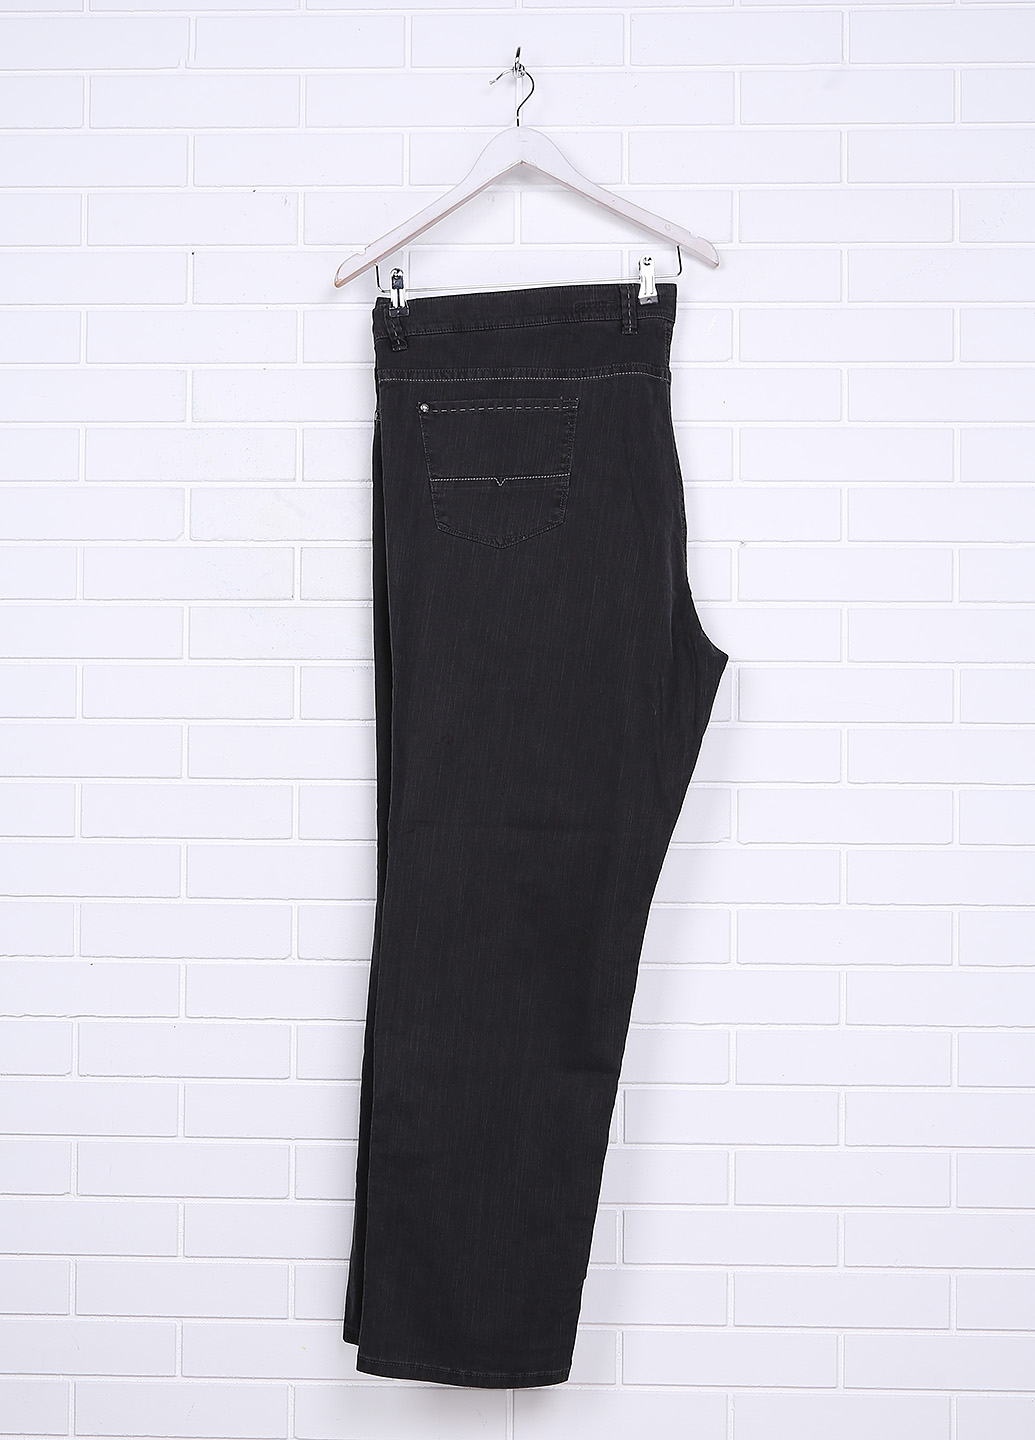 Мужские джинсы Pioneer 54/34 Темно-серый (P-6-009)